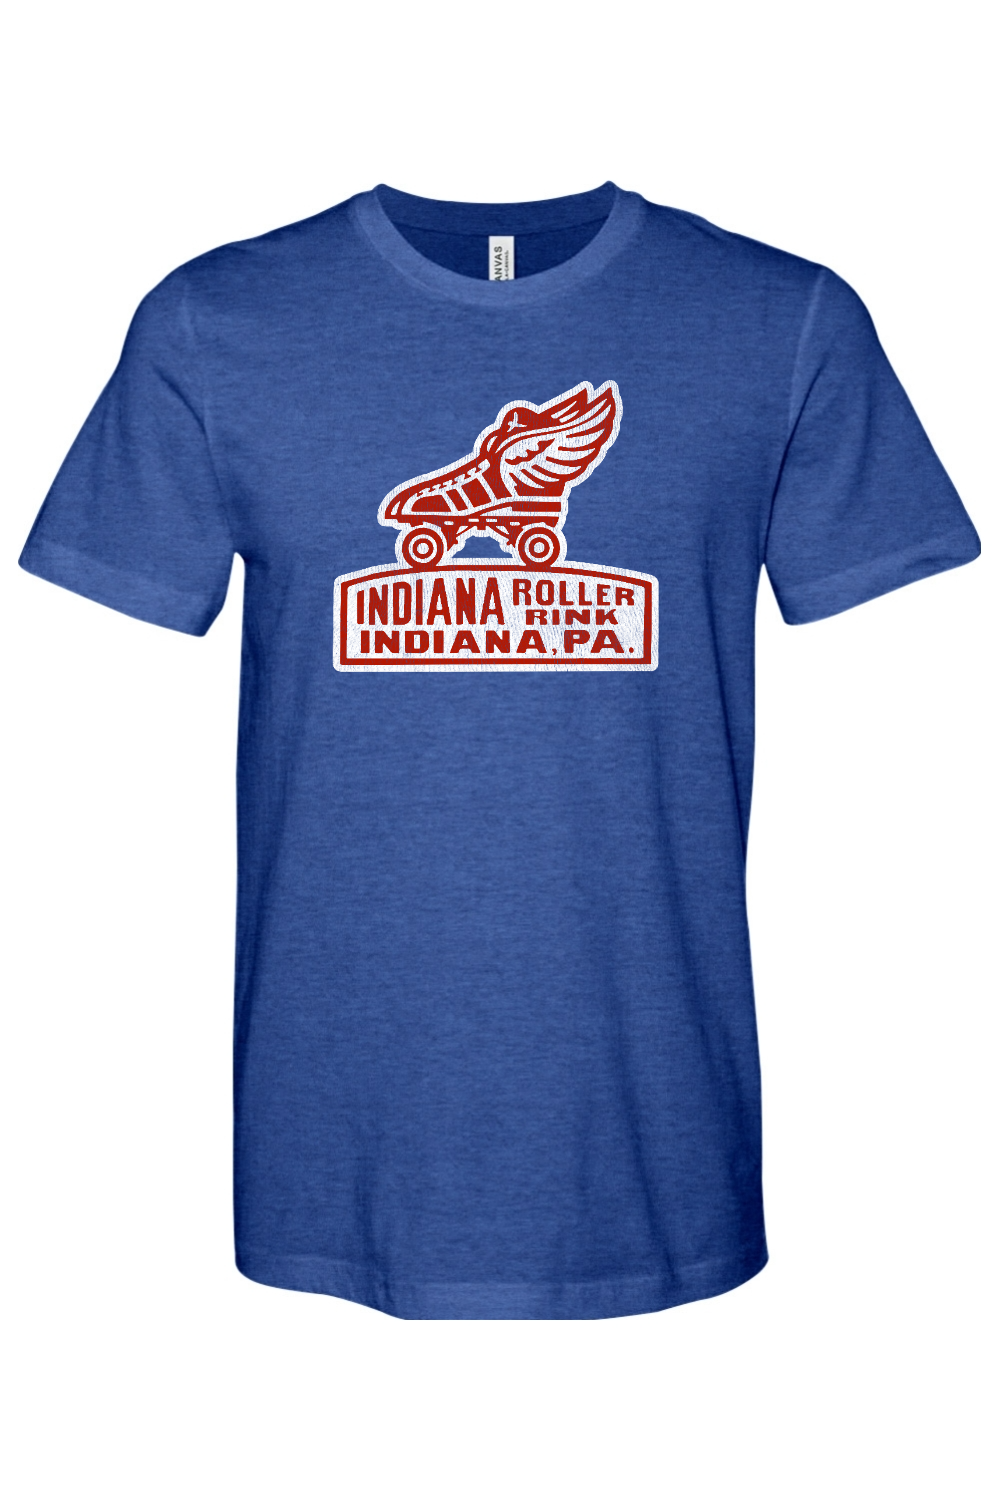 Indiana Roller Rink - Indiana, PA - Yinzylvania